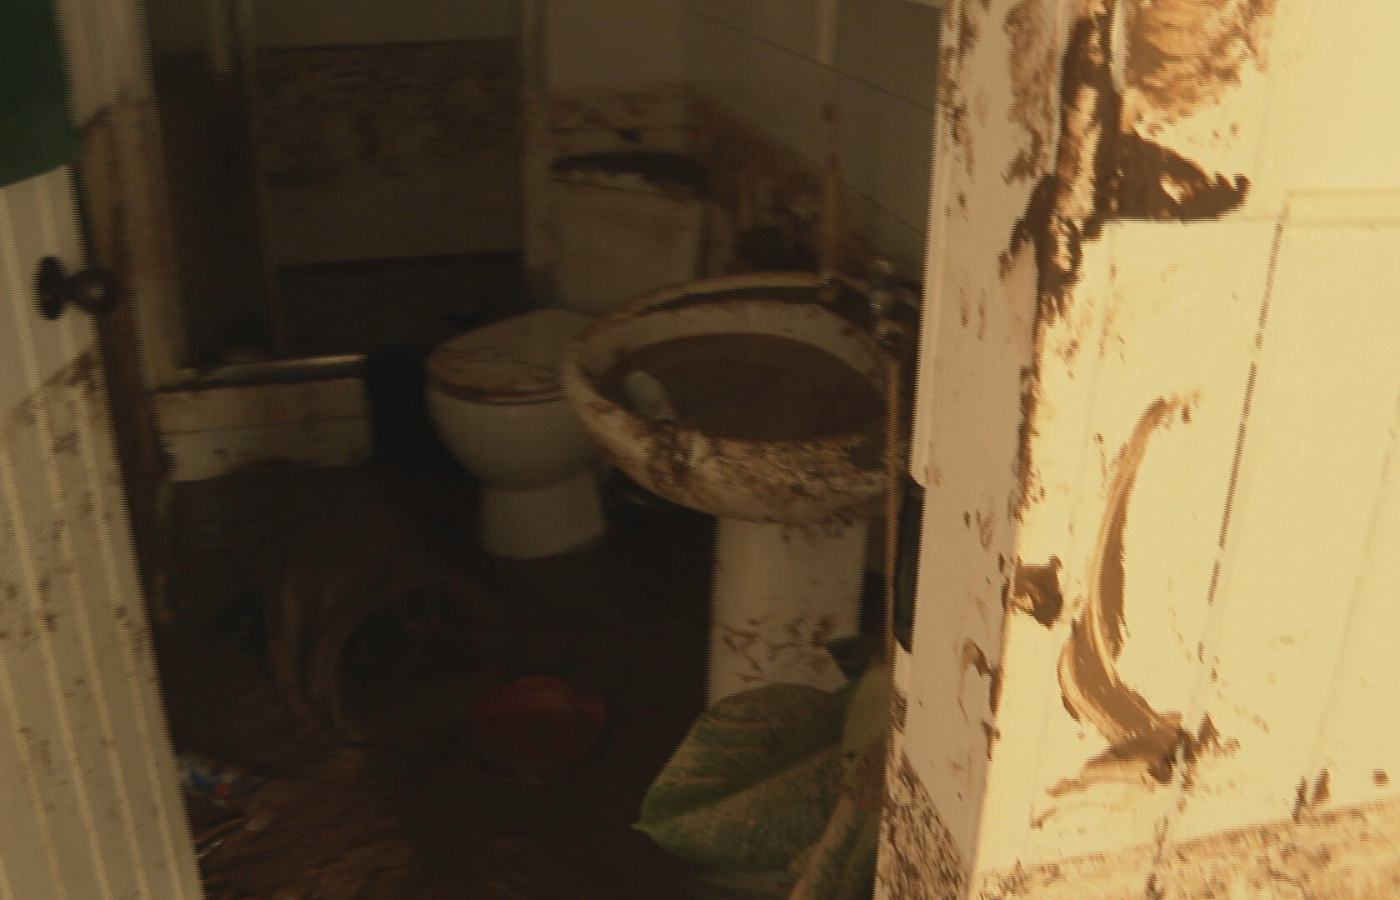 Bathroom of Eilidh Guthrie's cottage that was damaged during Storm Babet floods. 